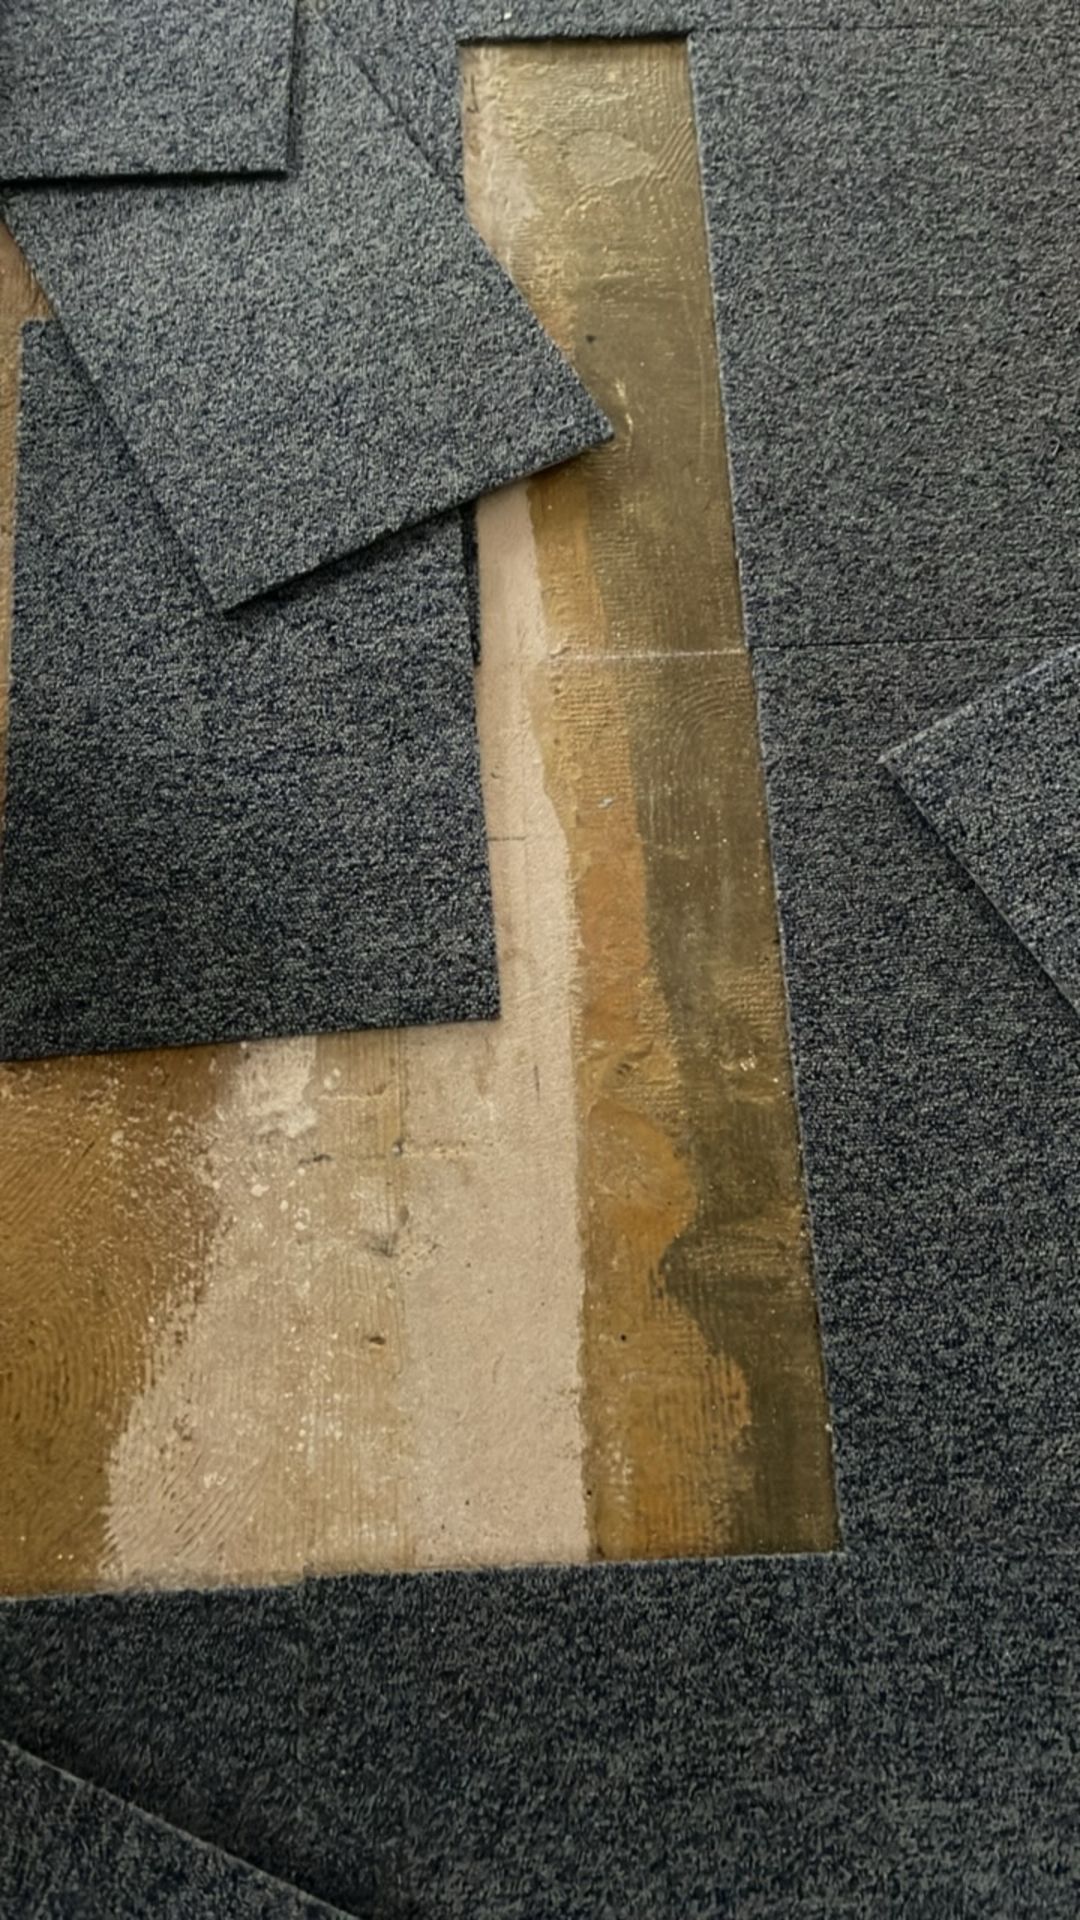 130Sq Mtr Of Blue Carpet Tiles - Image 3 of 3